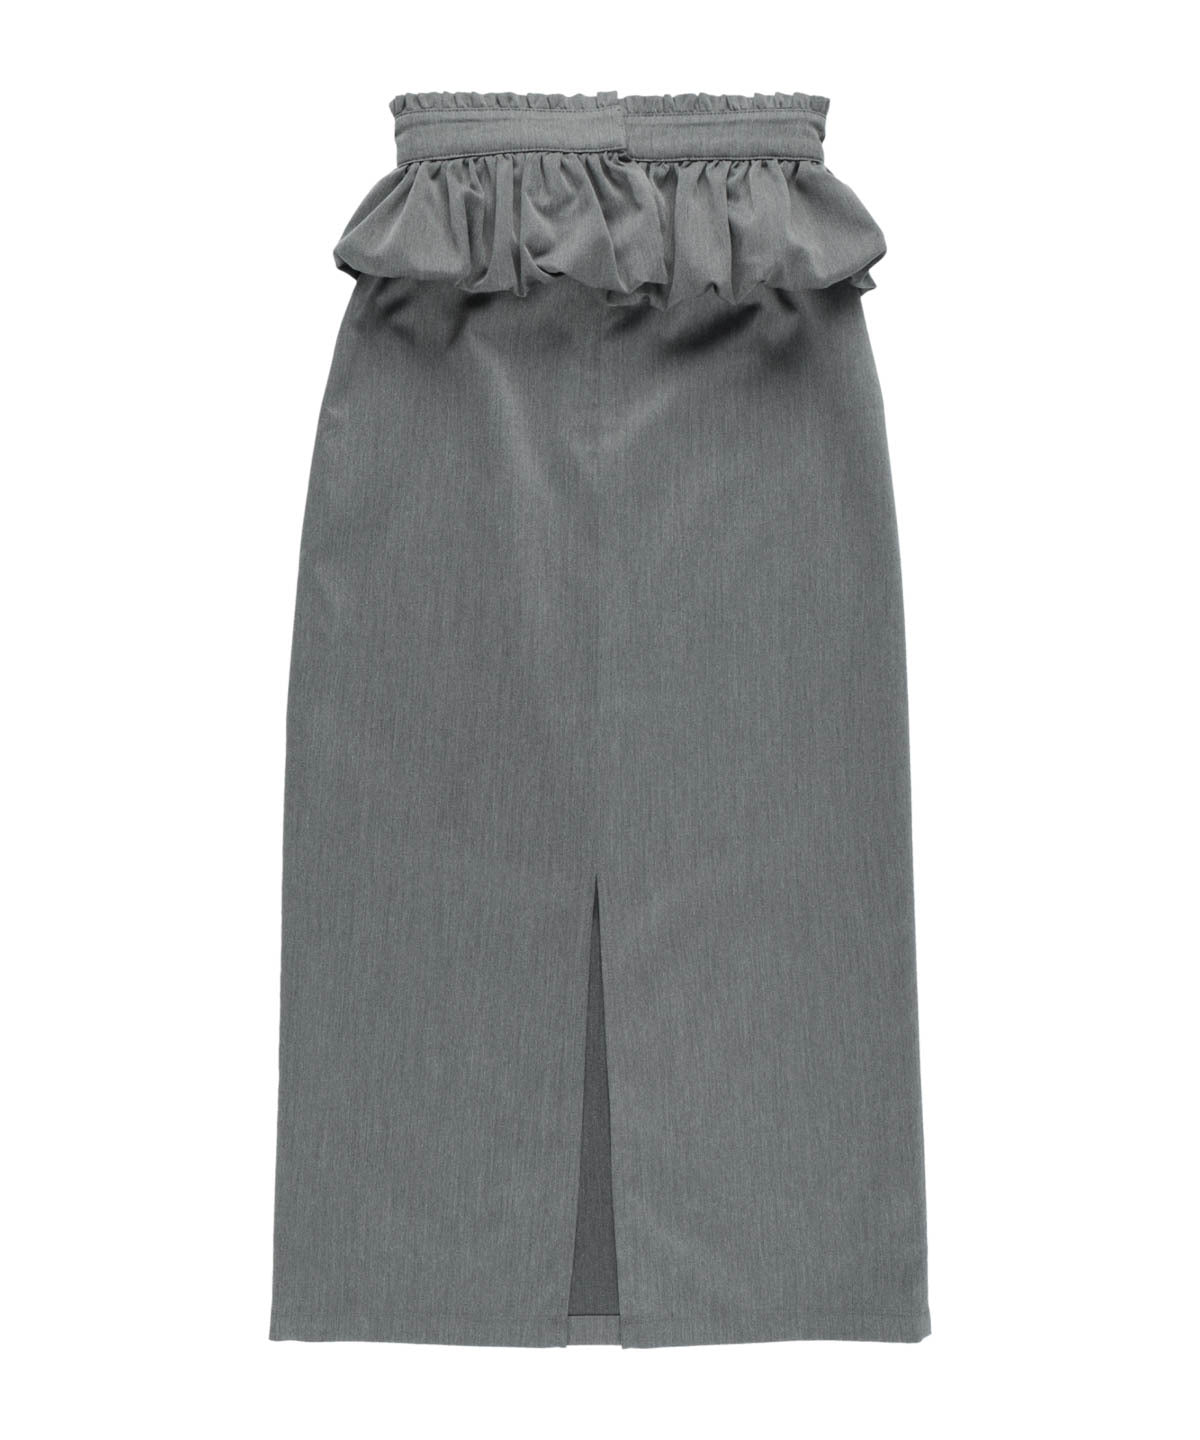 grise pencil skirt